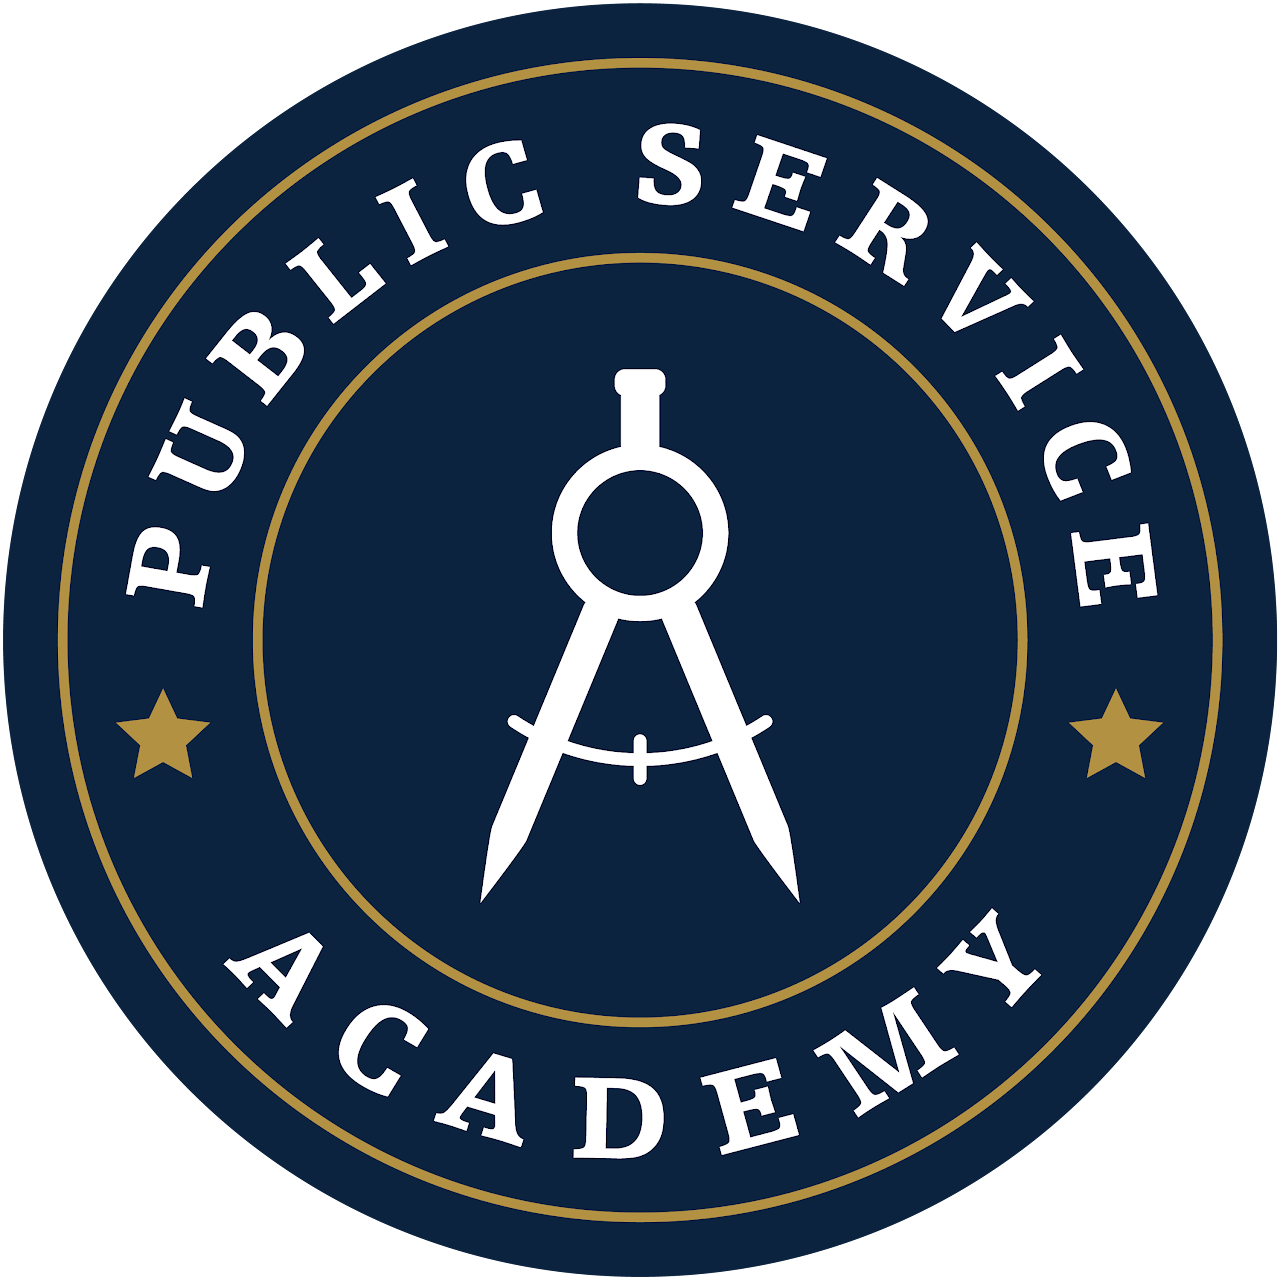 Public Service Academy